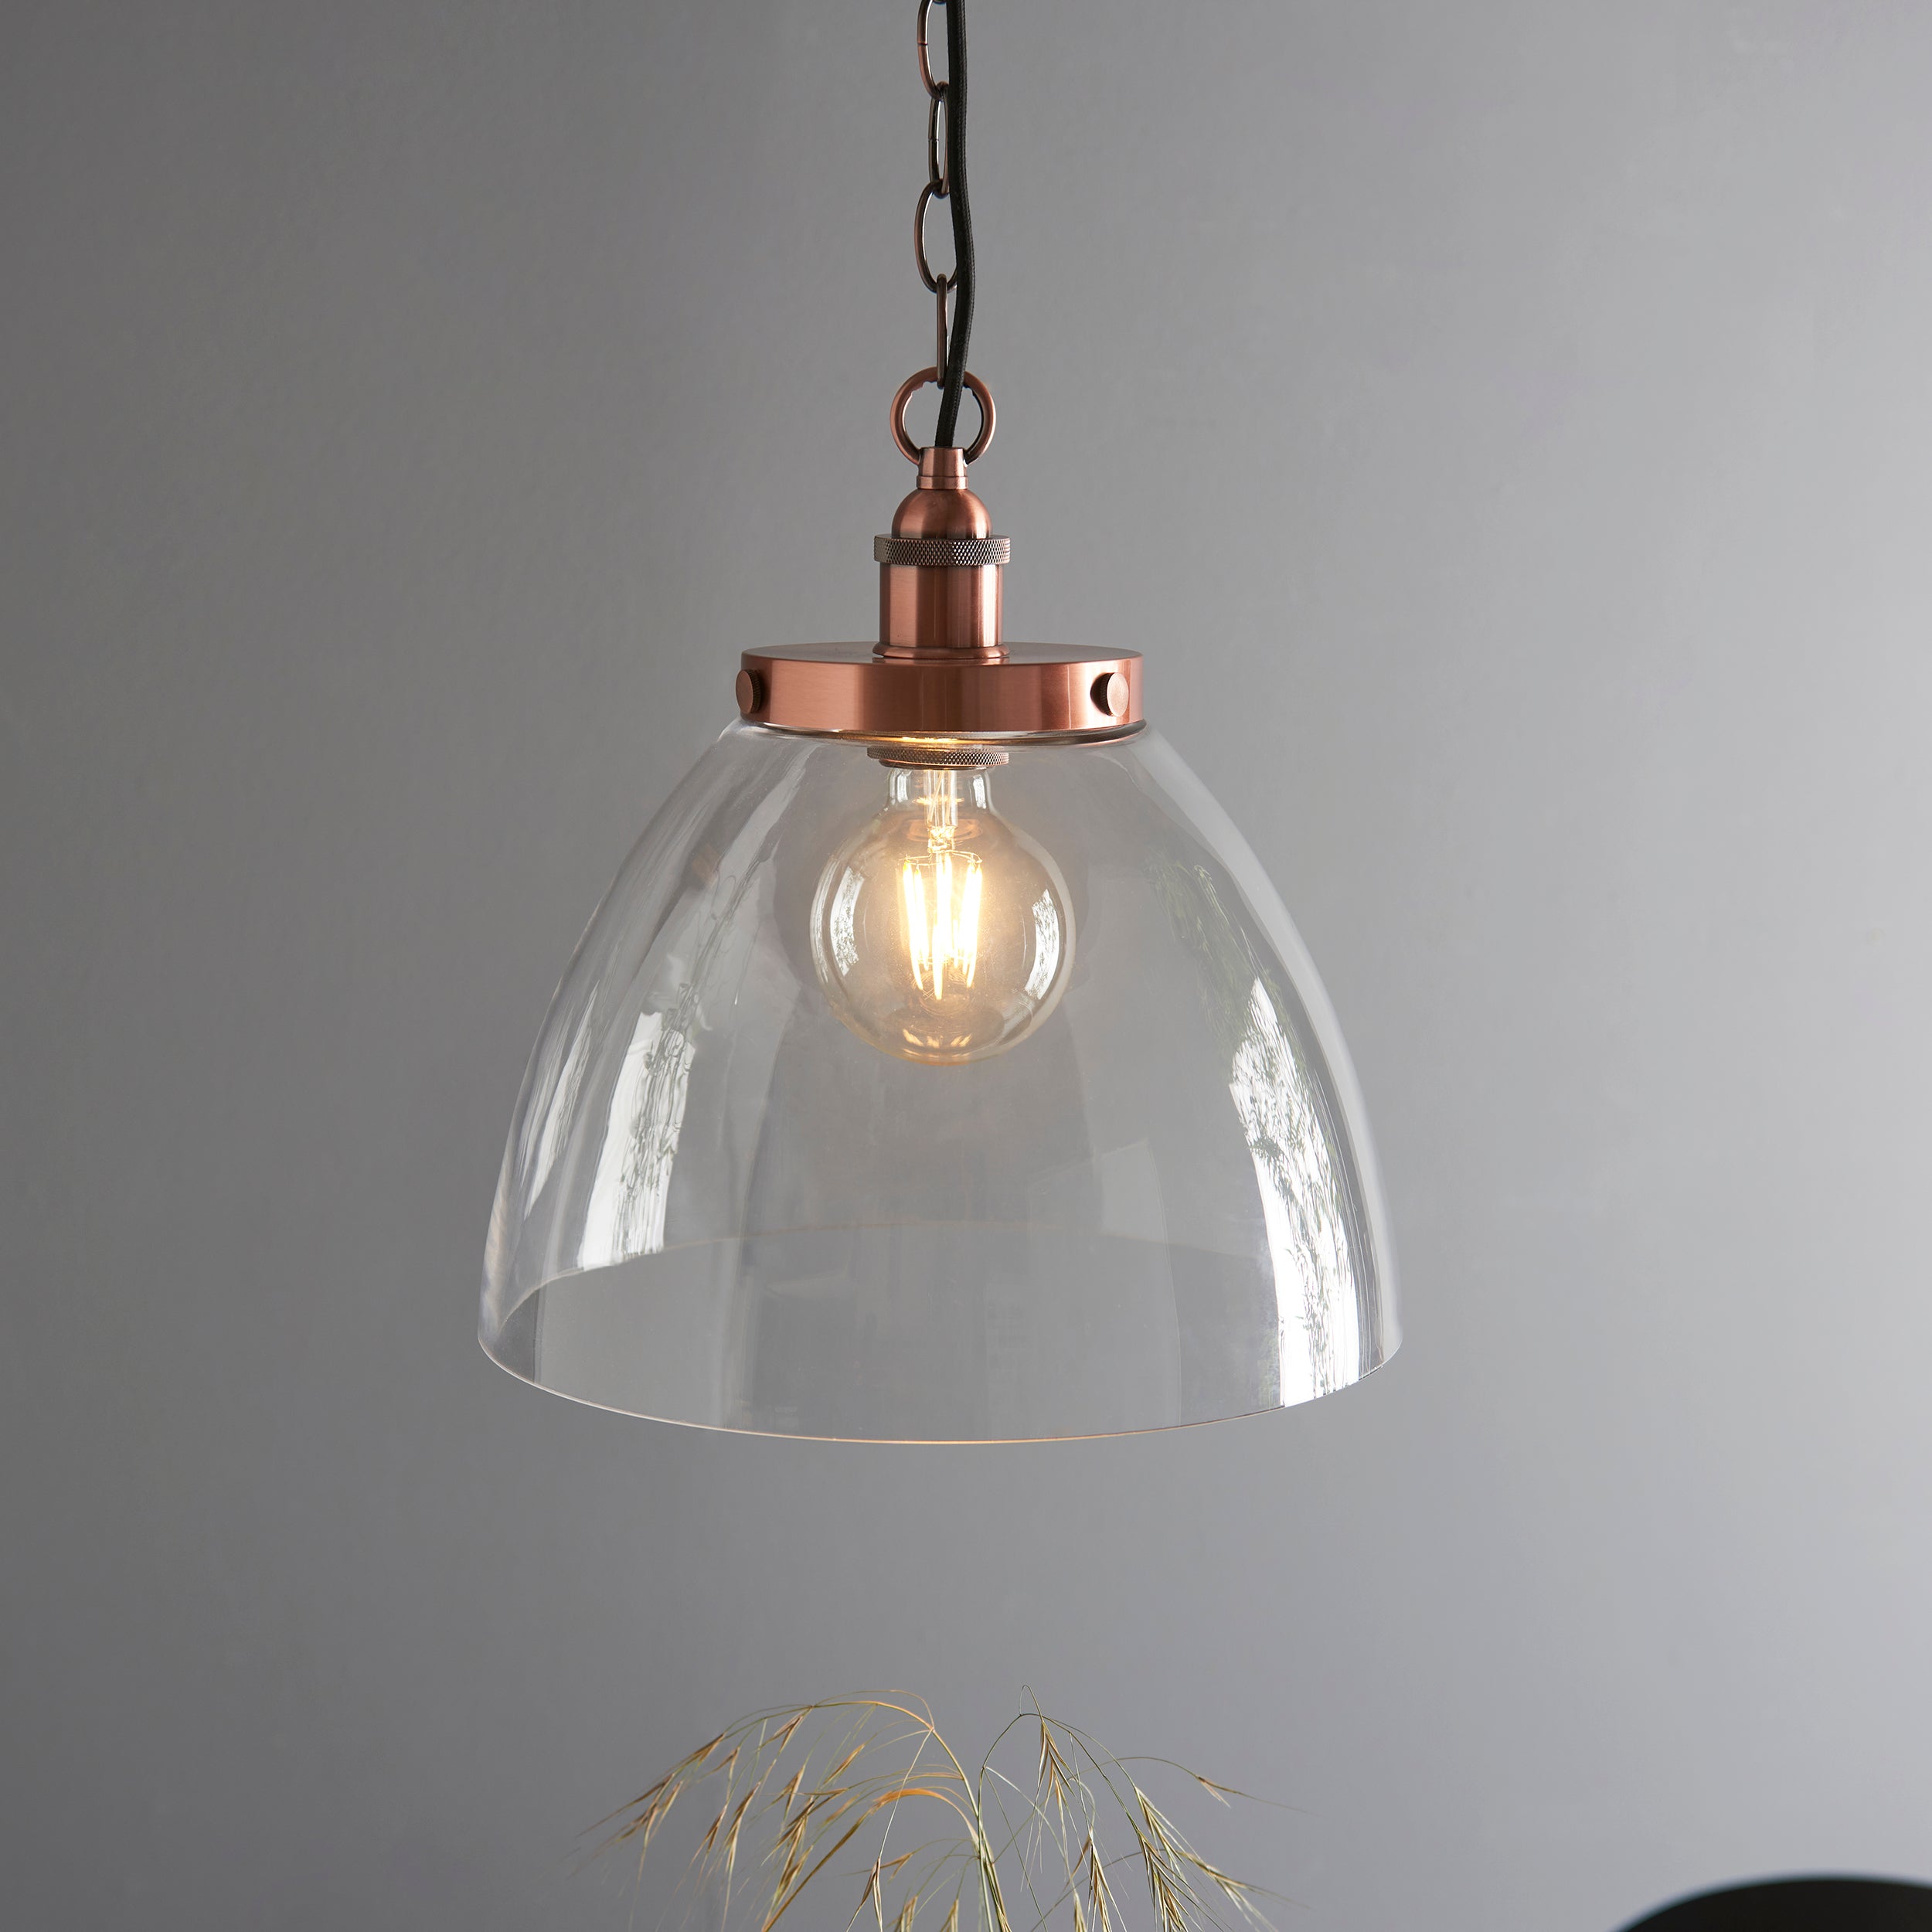 Hansen Authentic Resto Style Copper and Glass Pendant Light